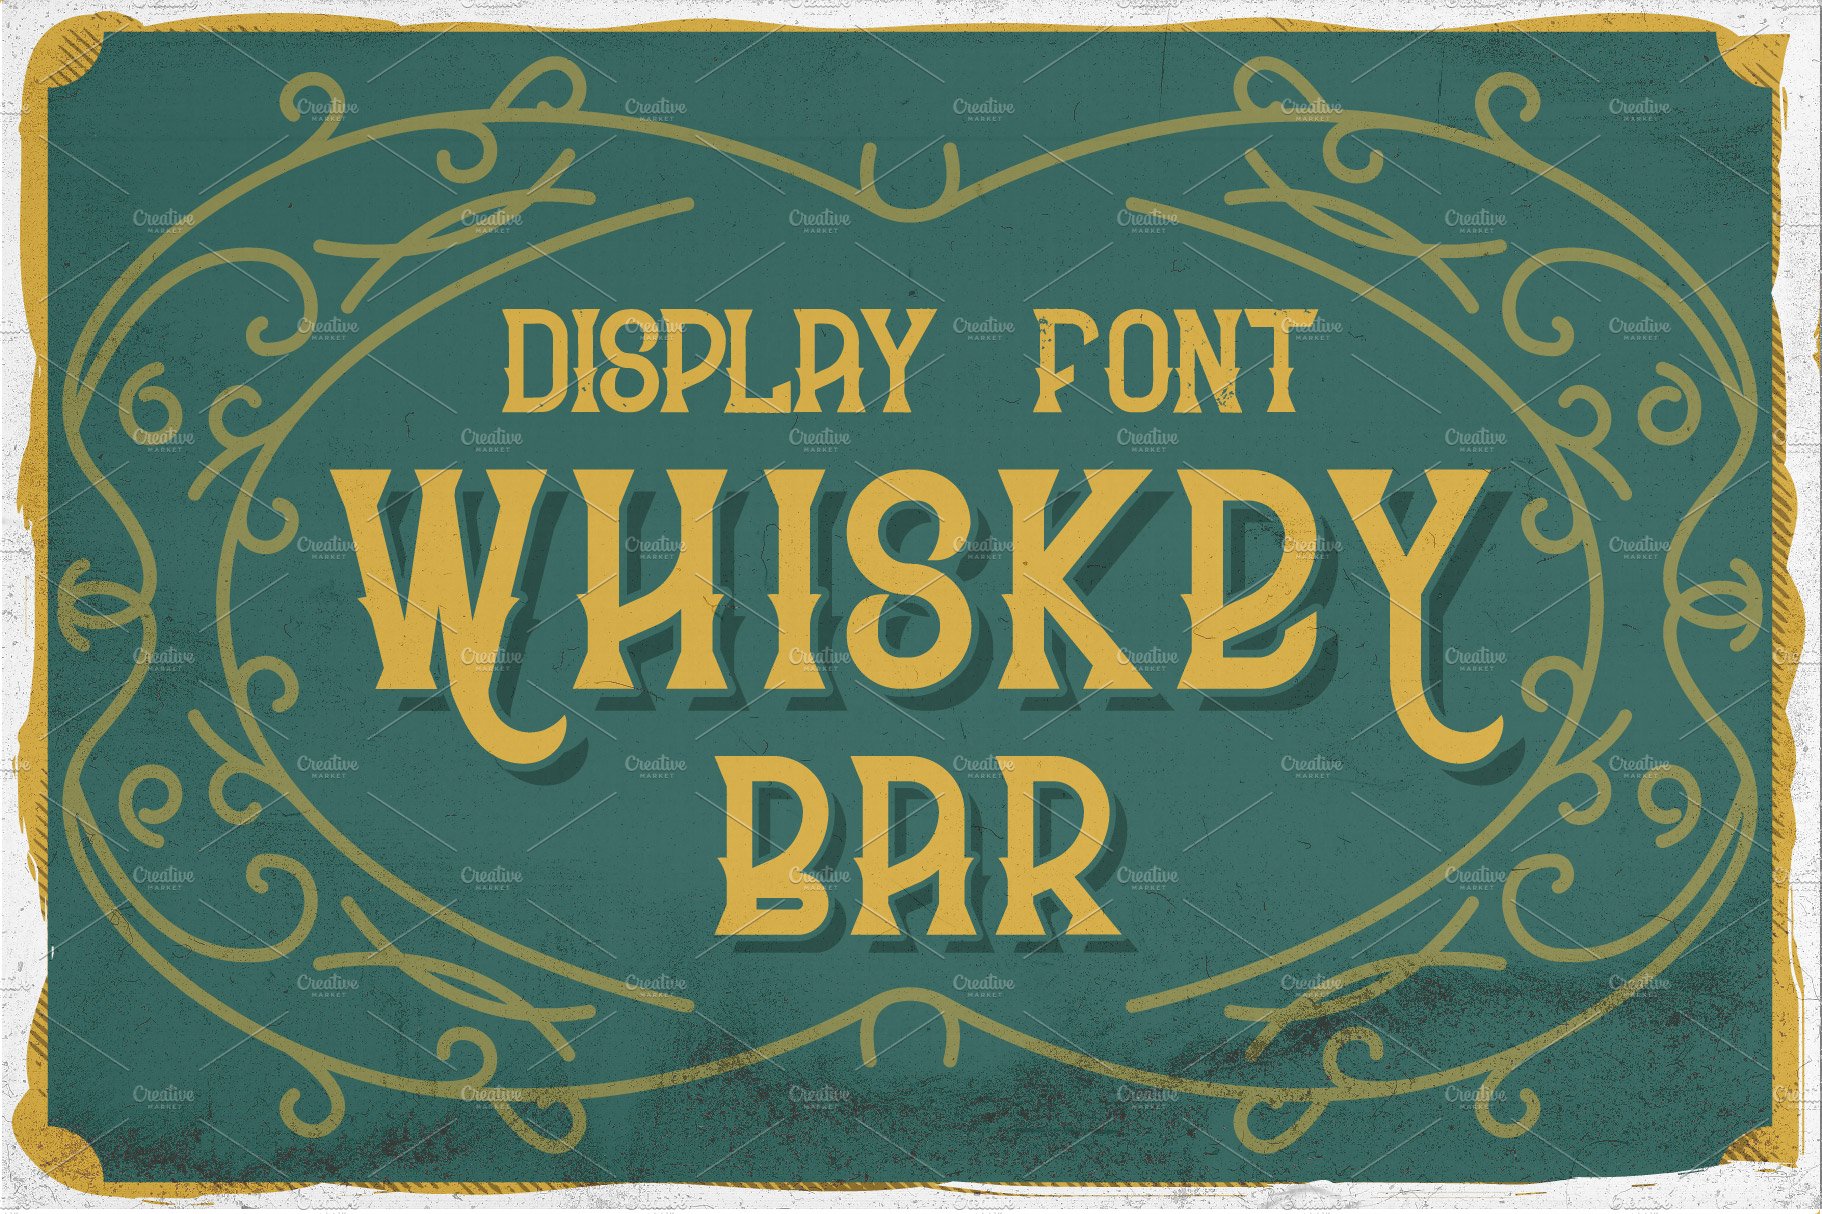 Whiskey bar font + 6 illustrations cover image.